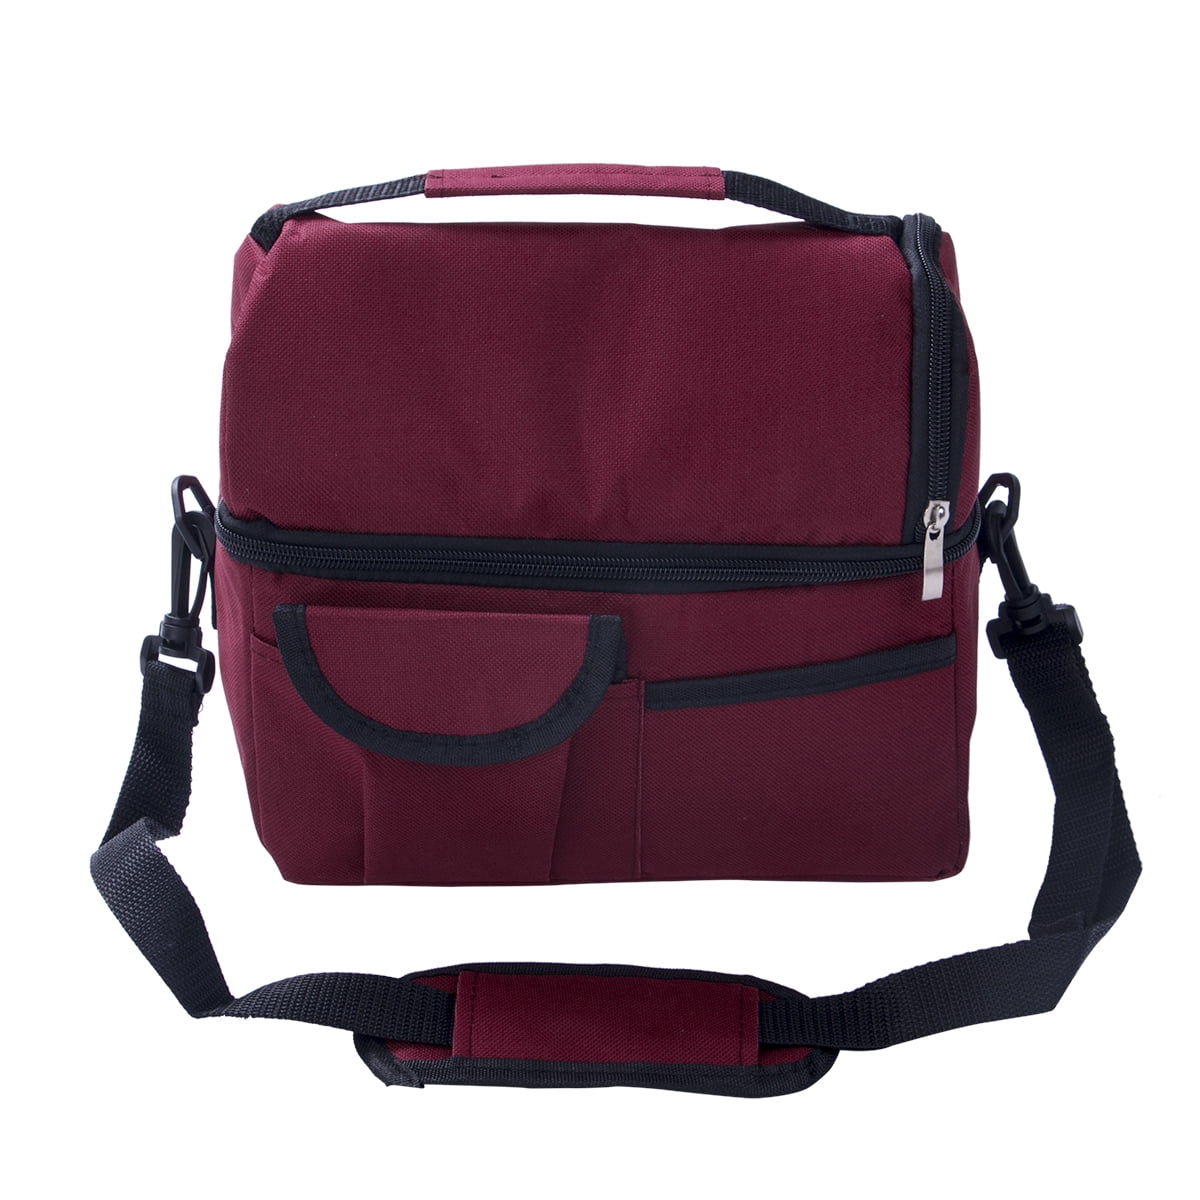 Details about   Larger Insulated Cooler Bag Lunch Picnic Backpack Thermal Shoulder Bag Big Box 